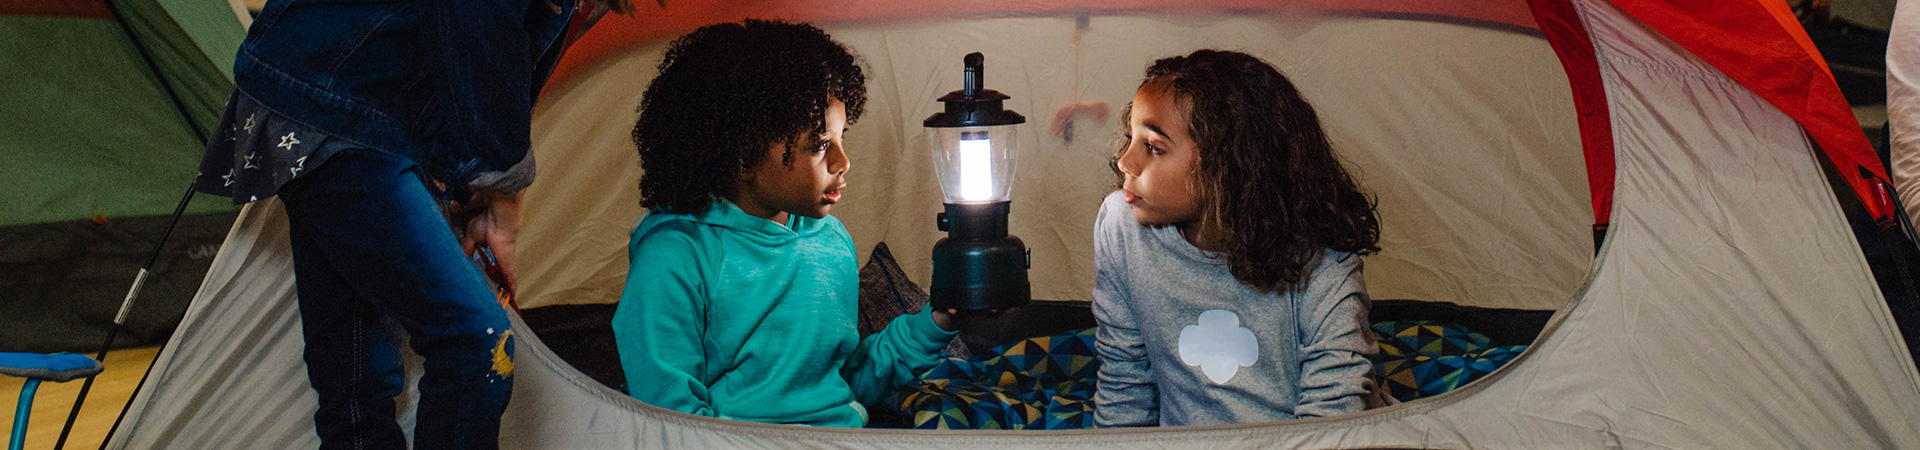  two girls in a tent talking by lantern light 